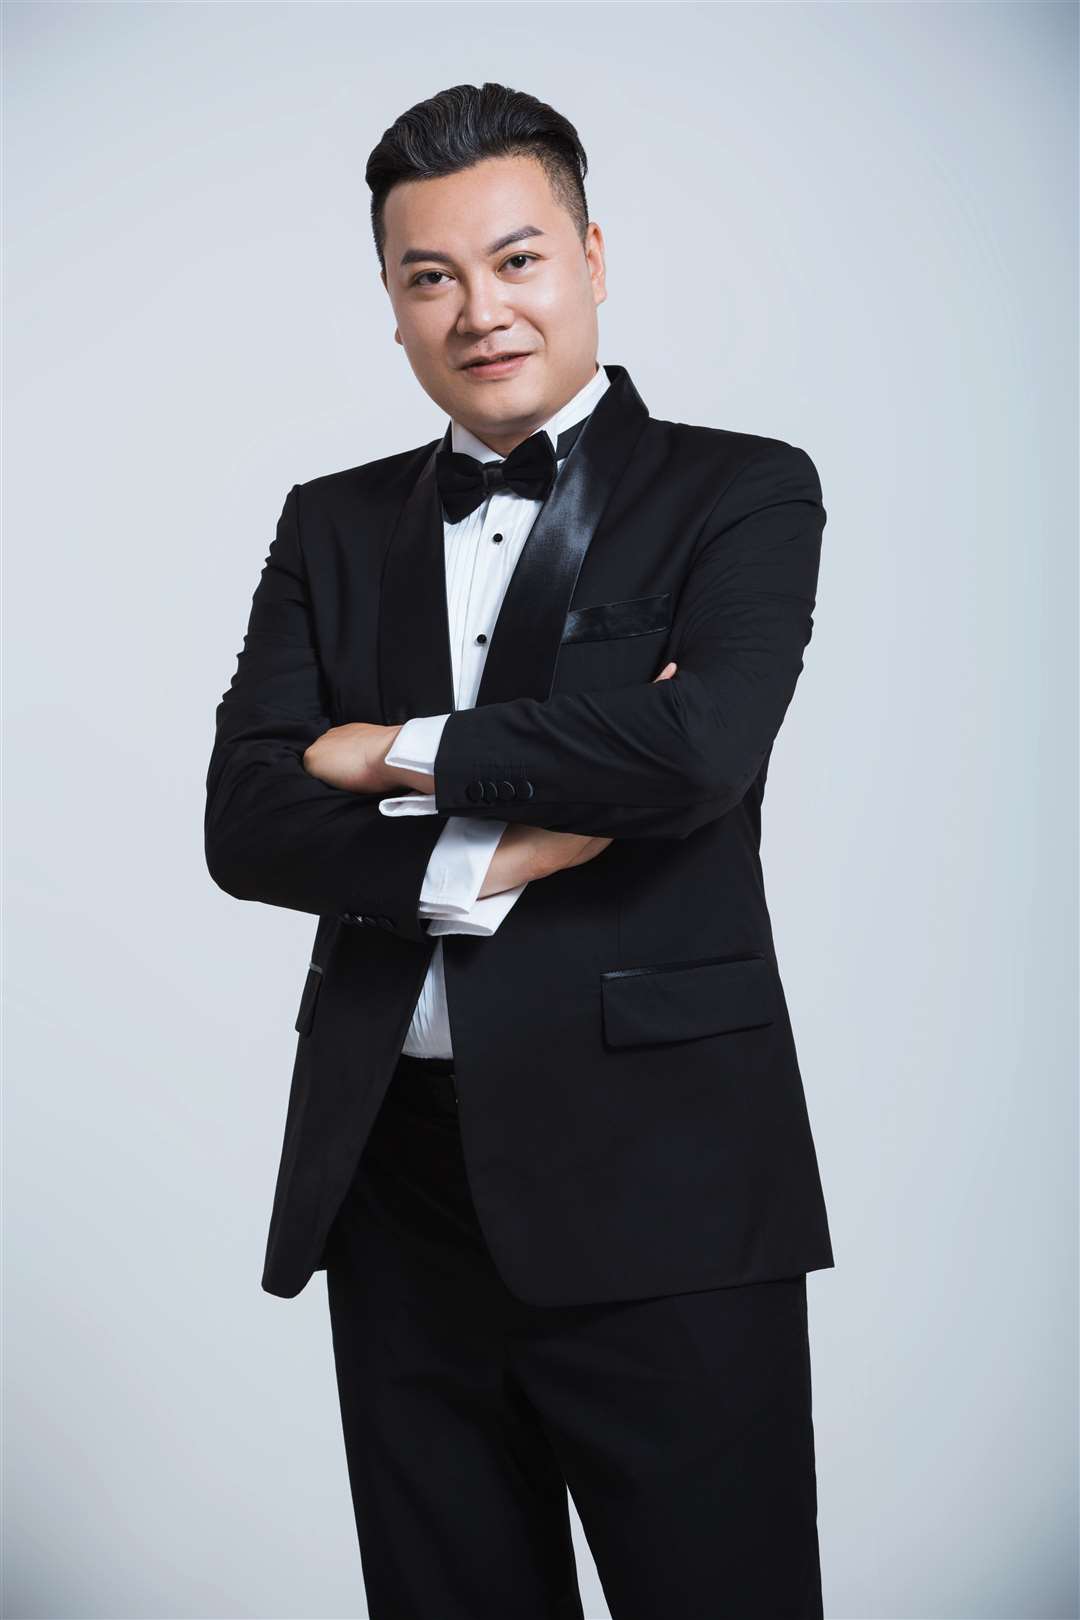 Shengzhi Ren will be among those entertaining audiences on the Opera Highlights tour.